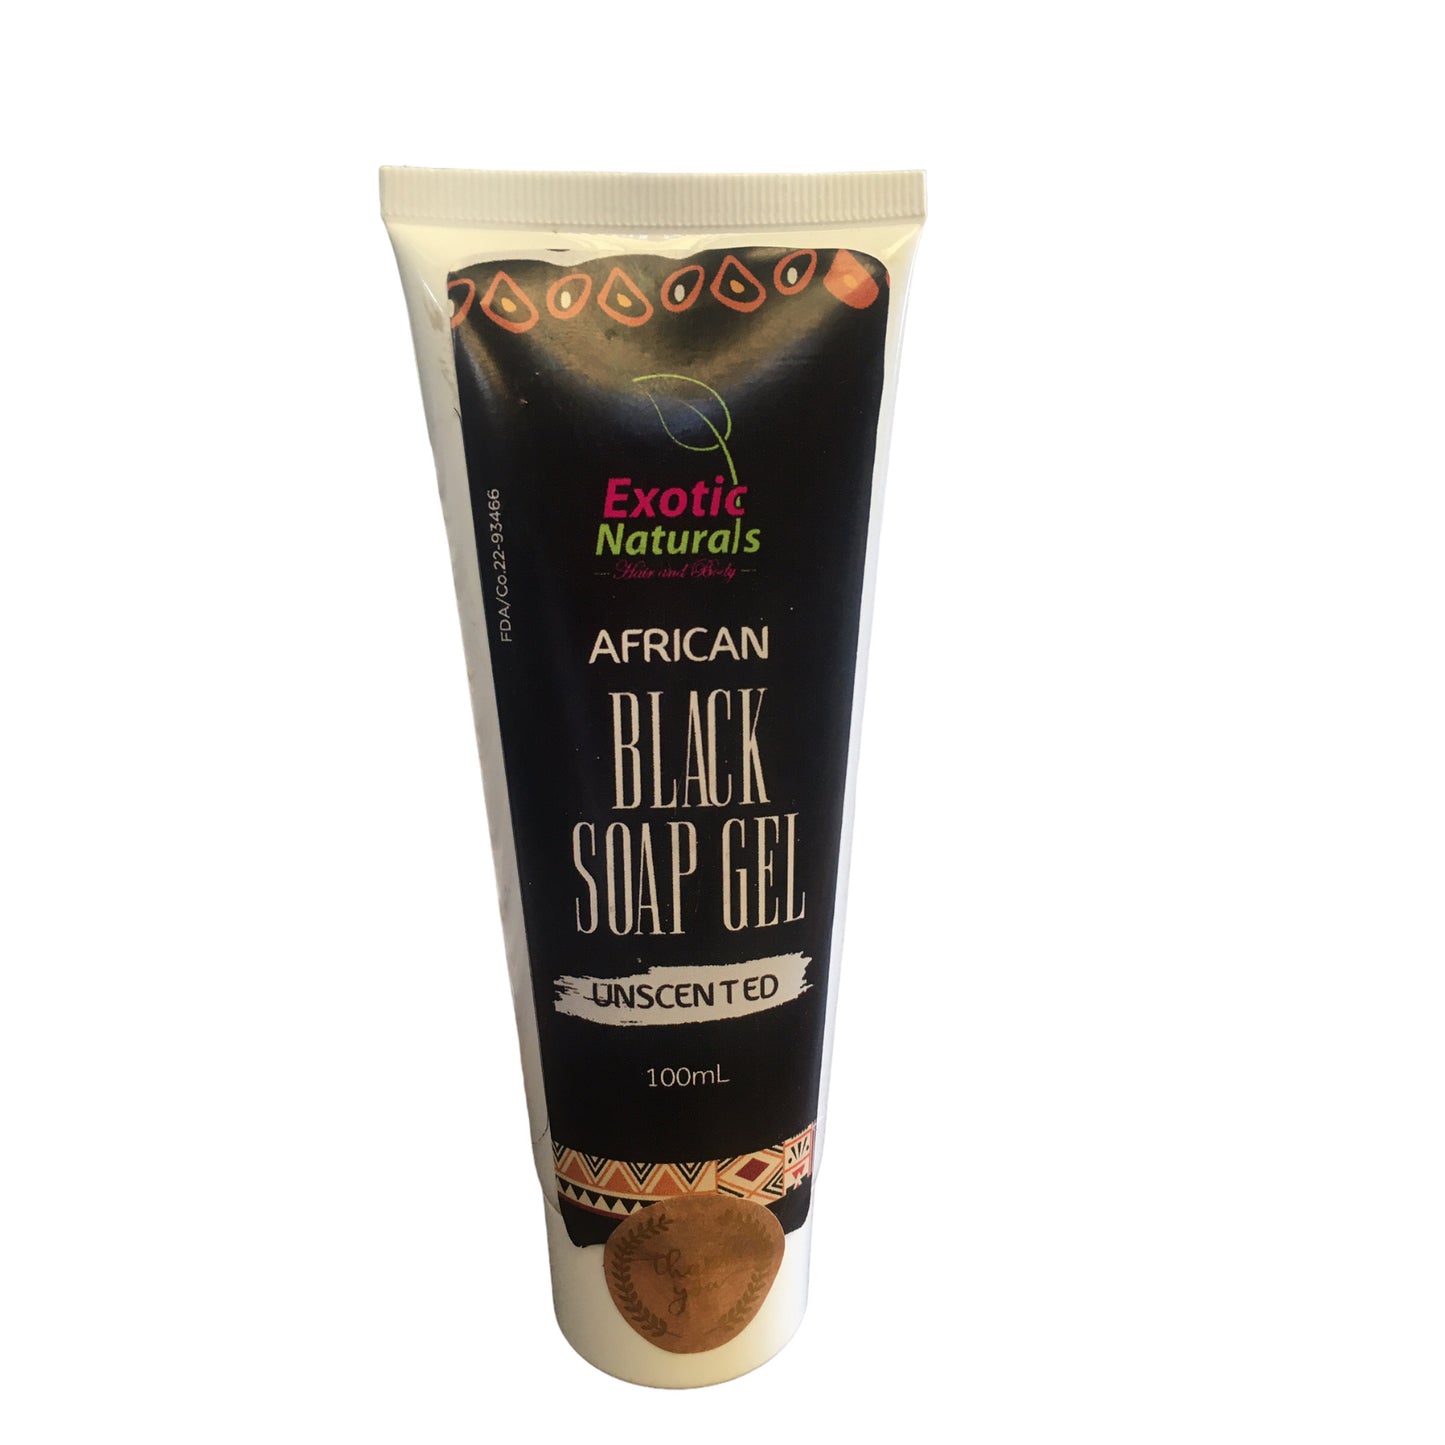 African Black Soap Gel